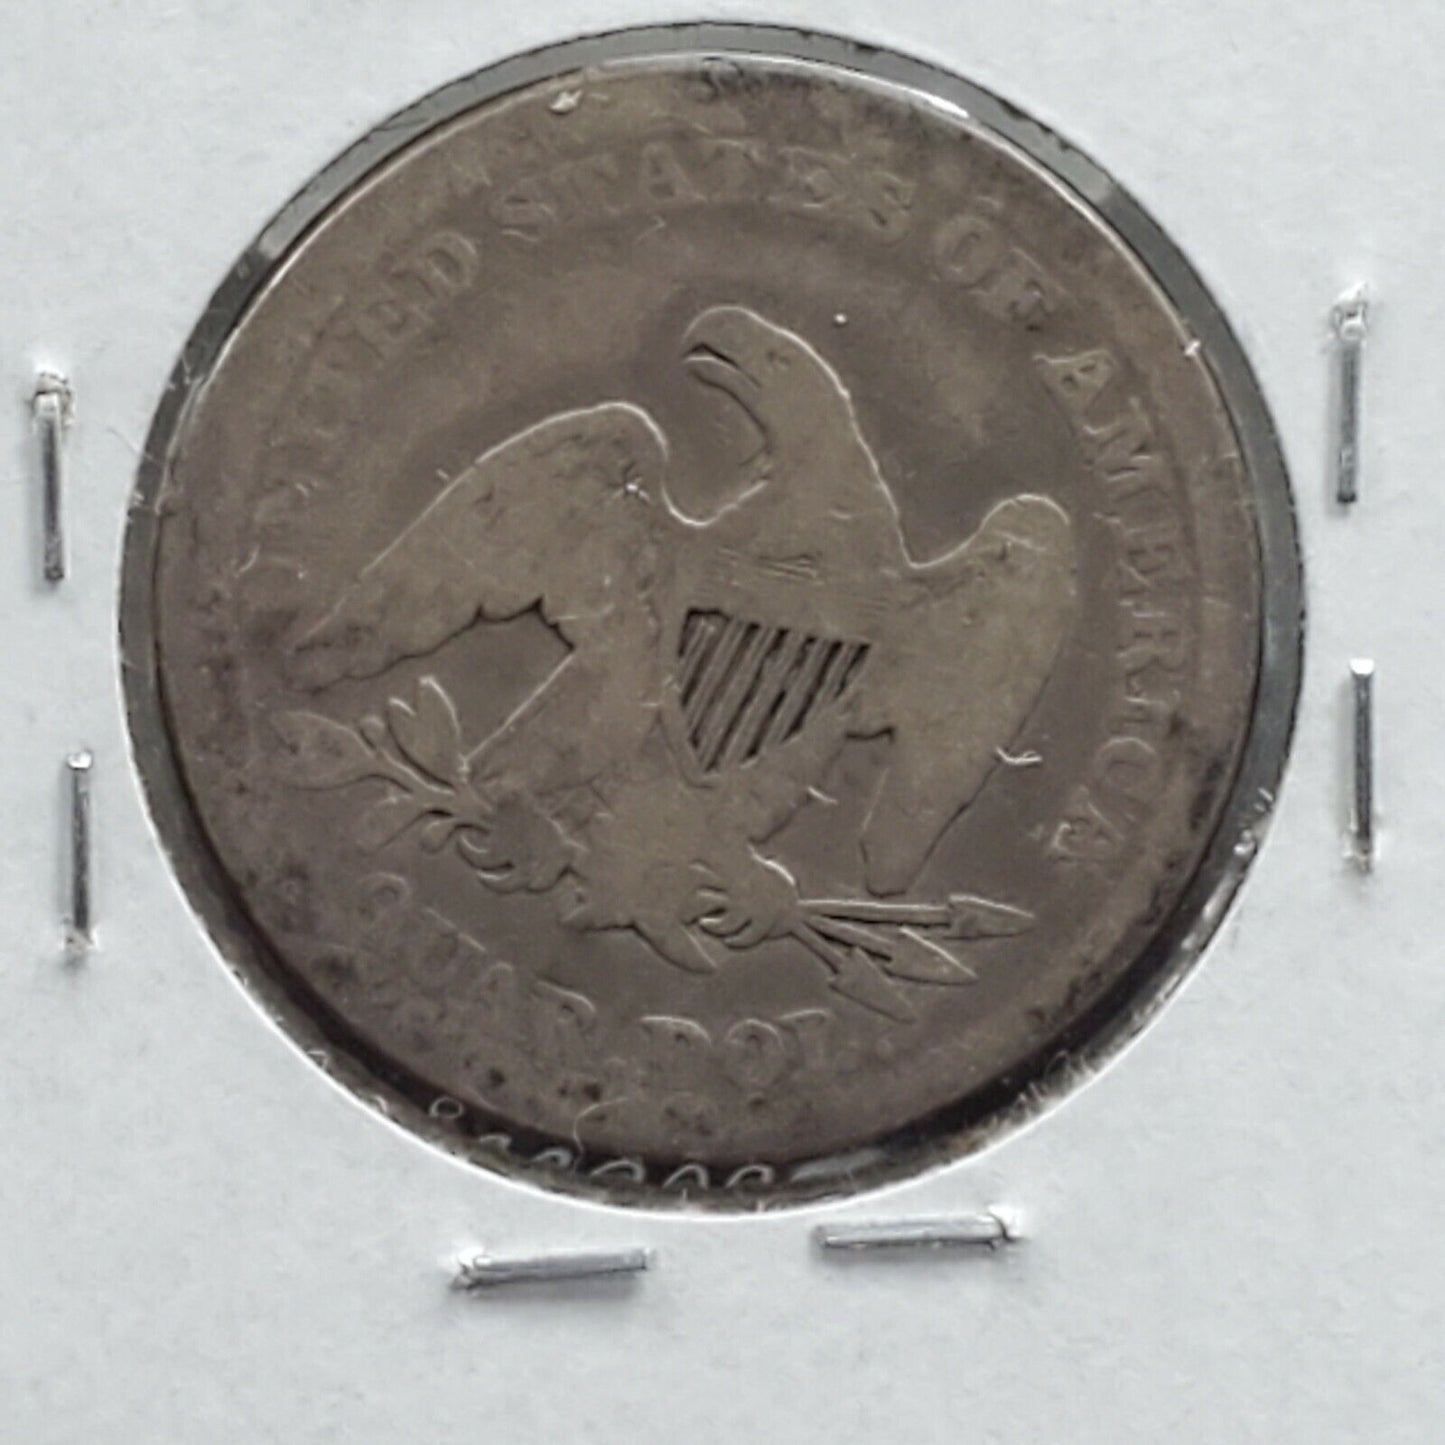 1858 P Seated Liberty Silver Quarter Coin Choice Circulated Condition